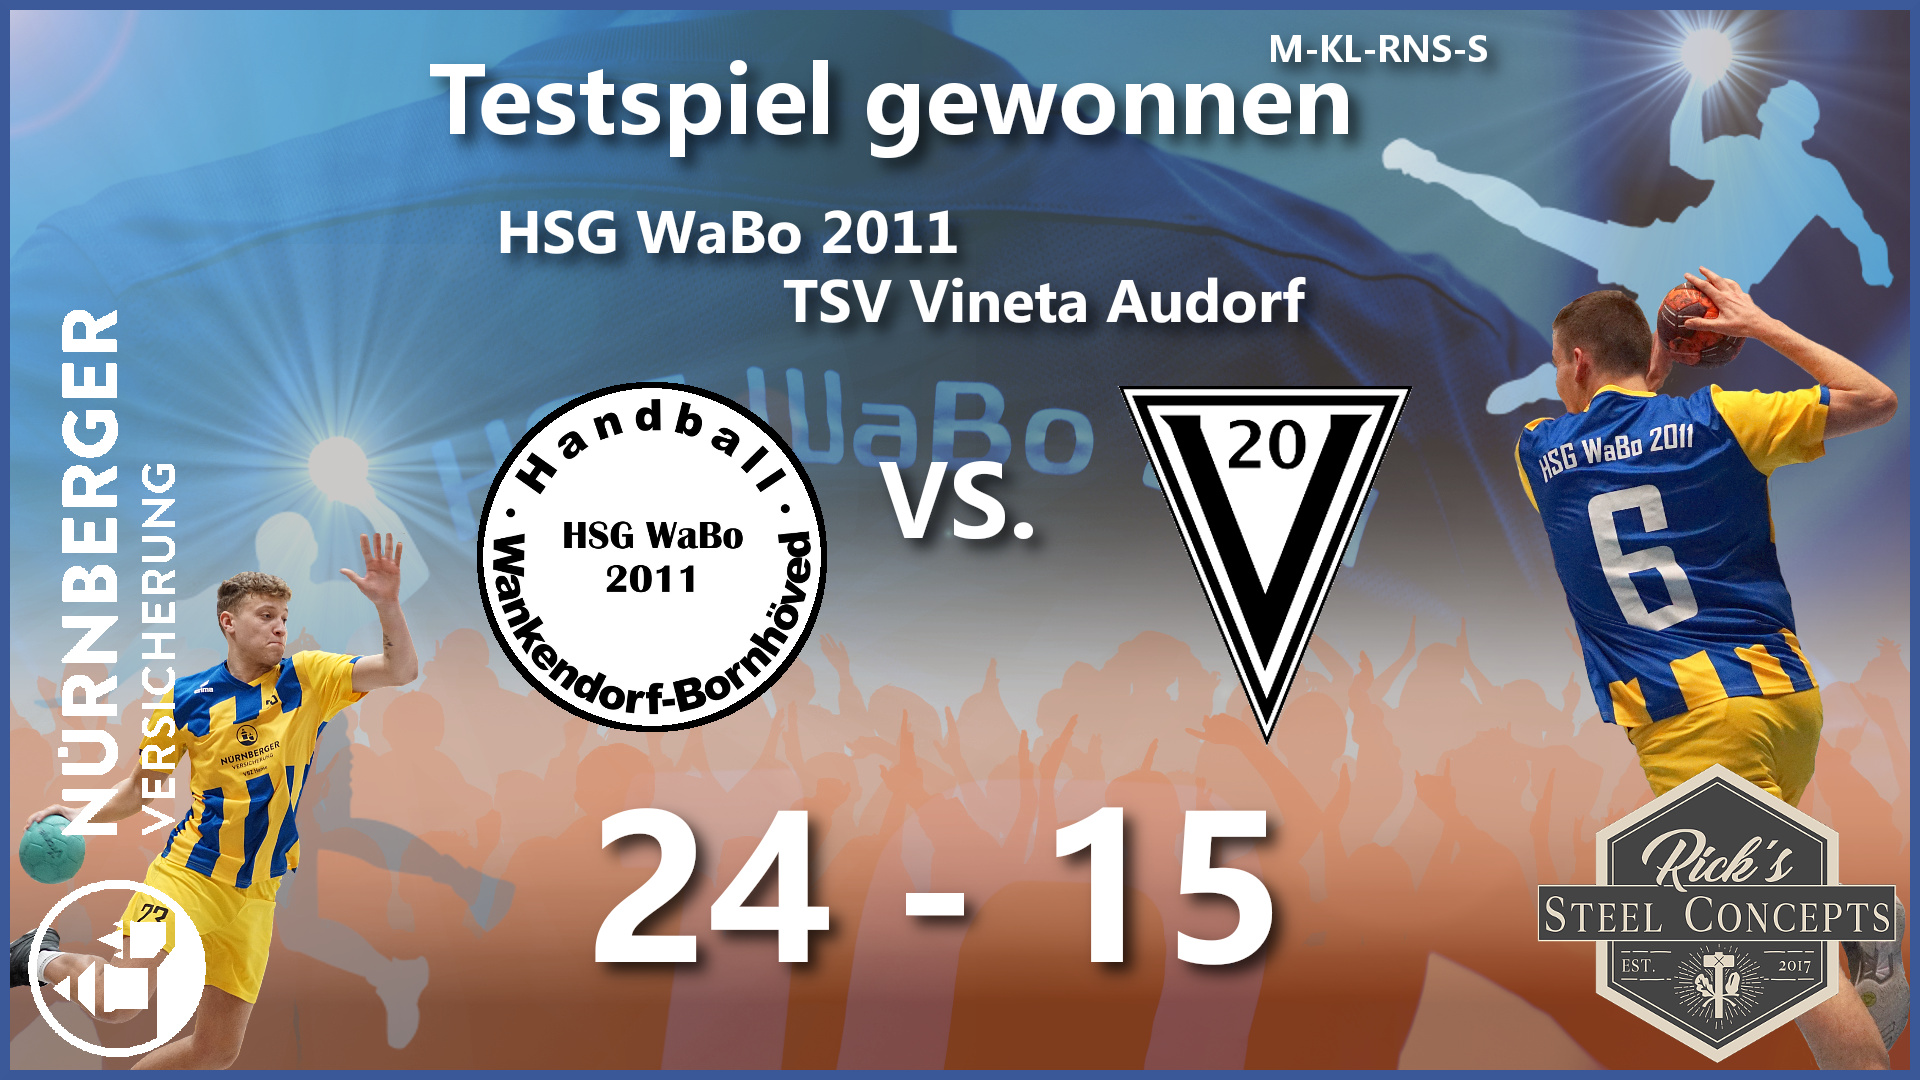 Testspiel gewonnen - WaBo 2011 gegen TSV Vineta Audorf